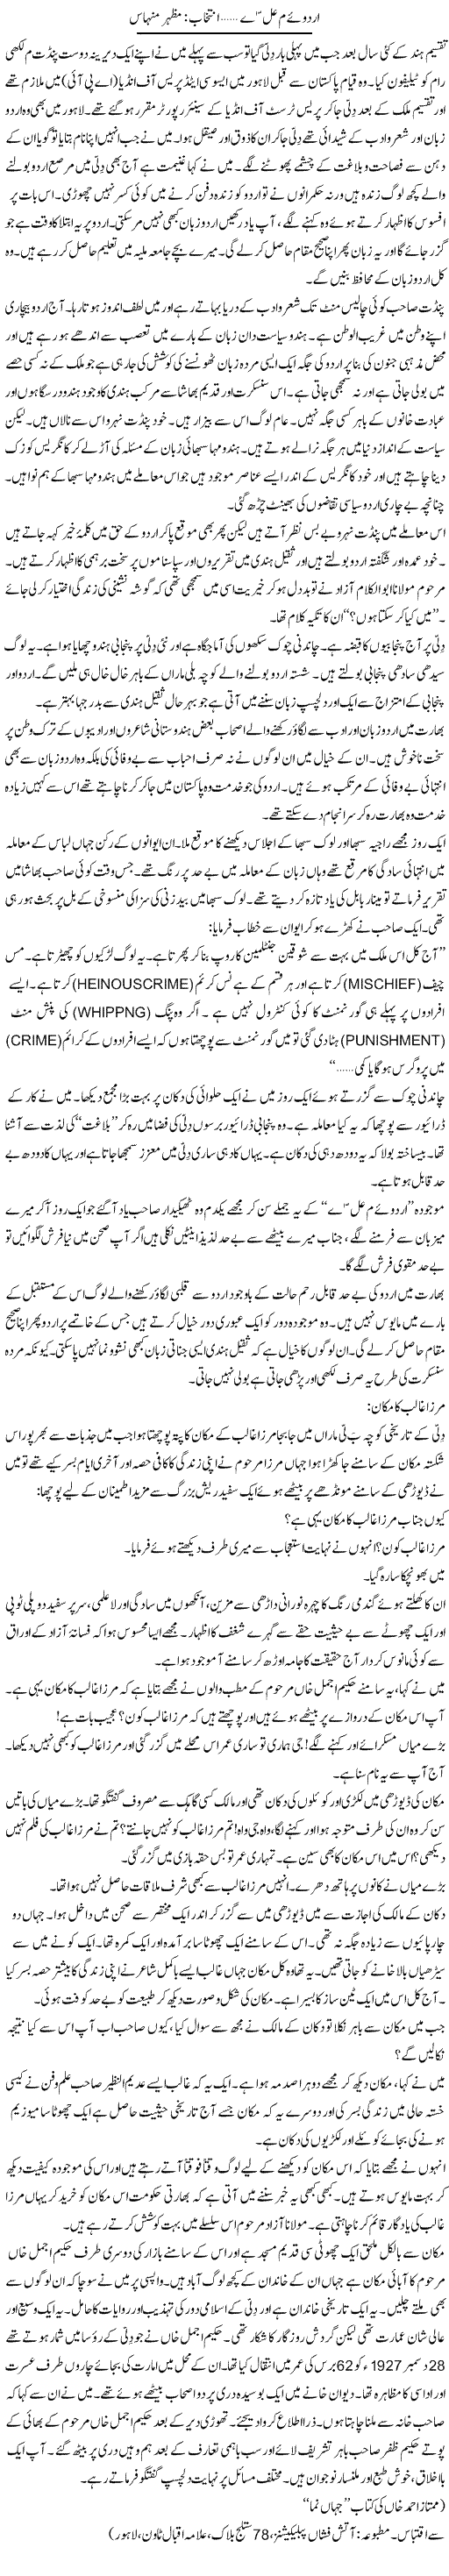 Urdu e Mualla | Mazhar Minhas | Daily Urdu Columns